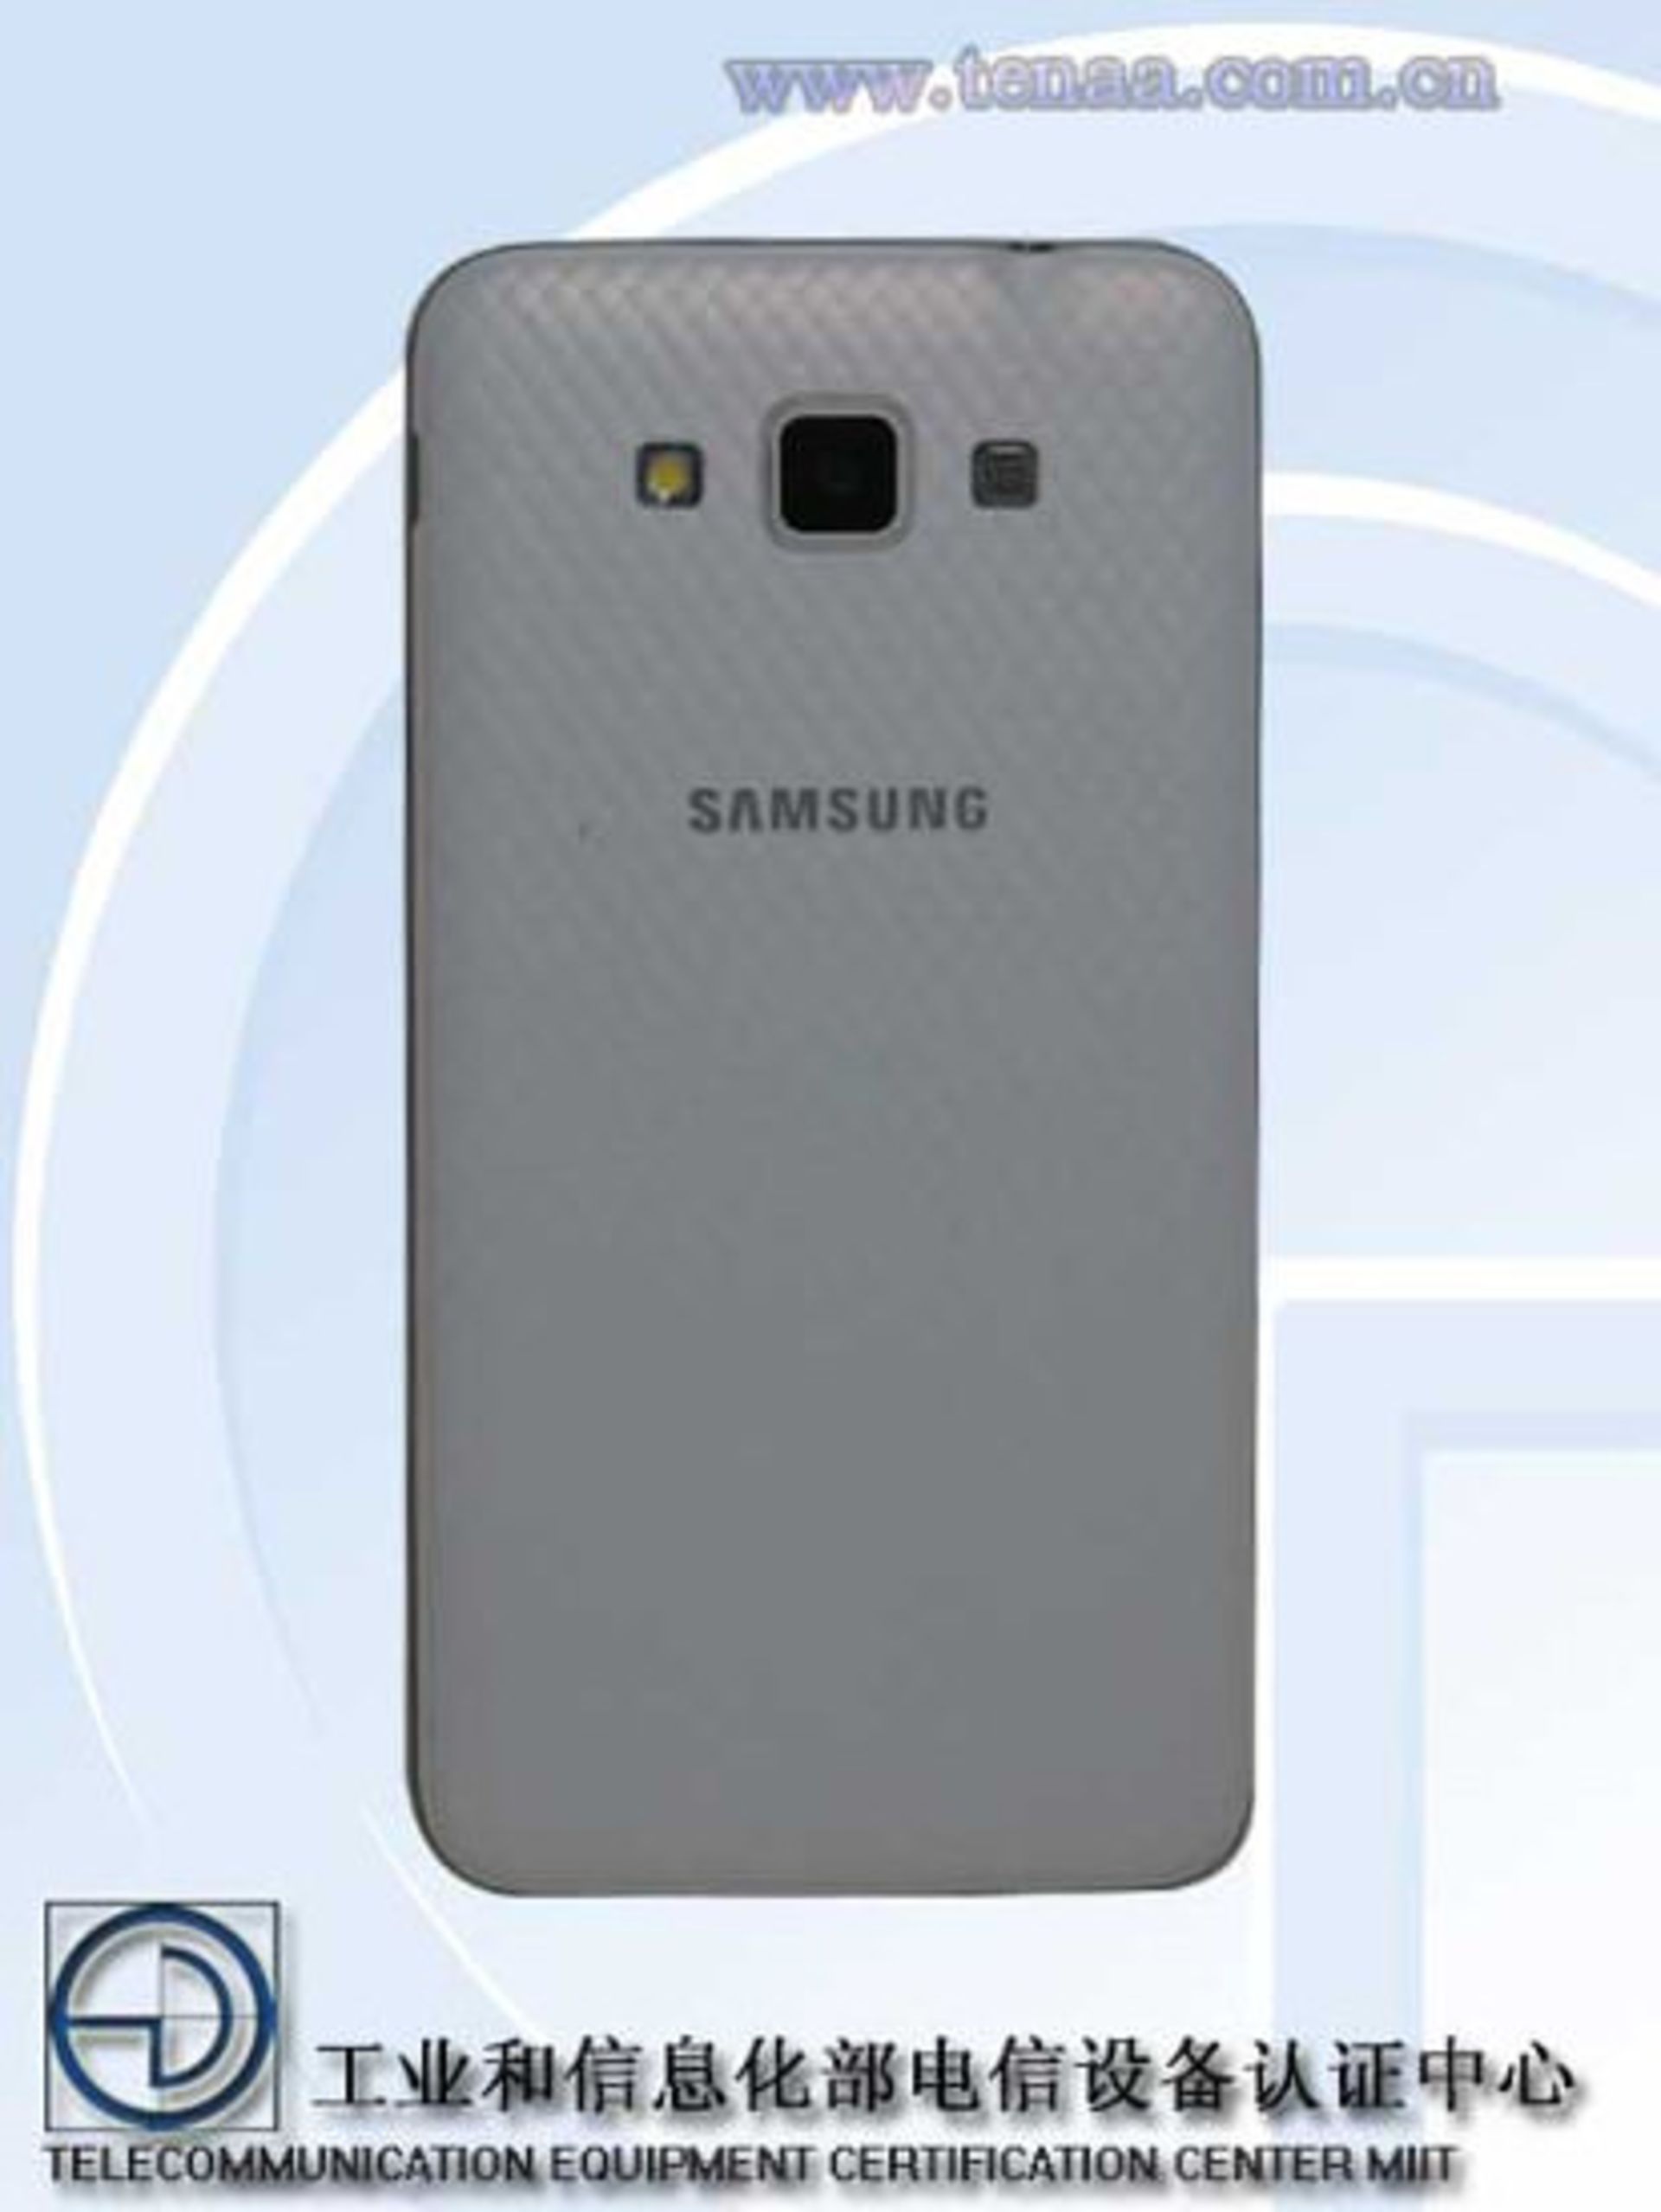 Samsung-Galaxy-Grand-3-SM-G7200 3